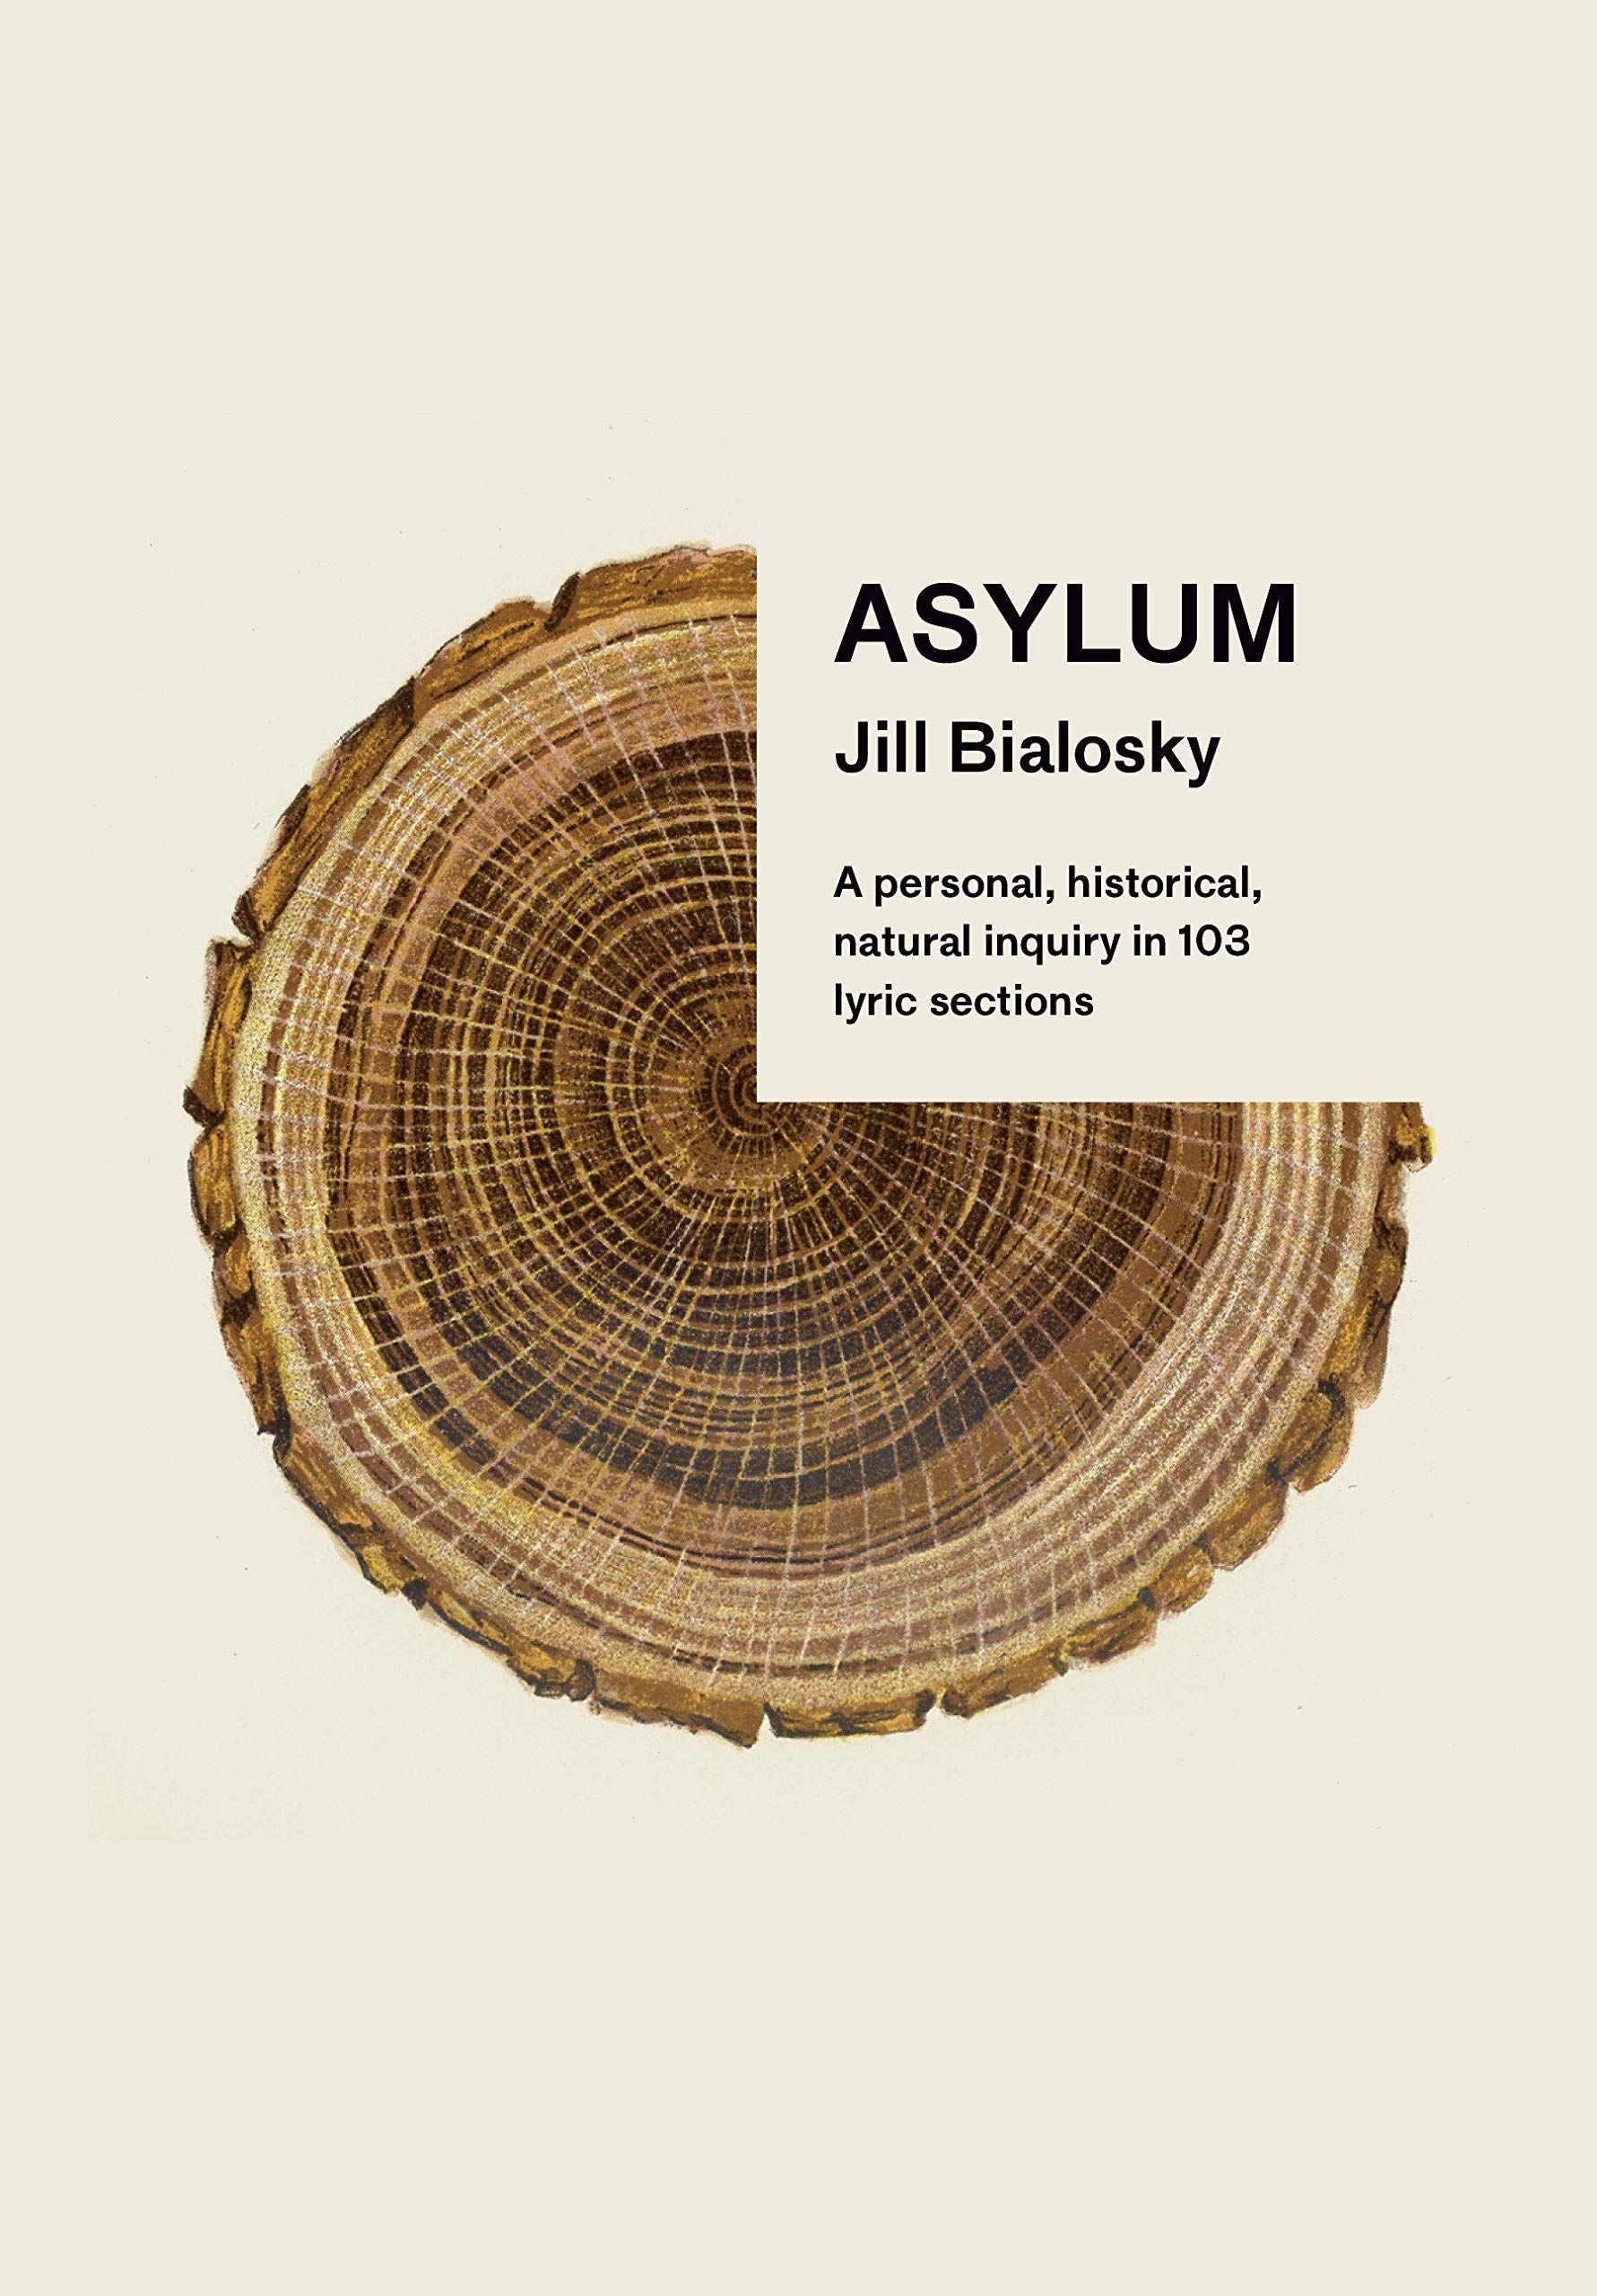 “In the Primal Woods”: On Jill Bialosky’s “Asylum”